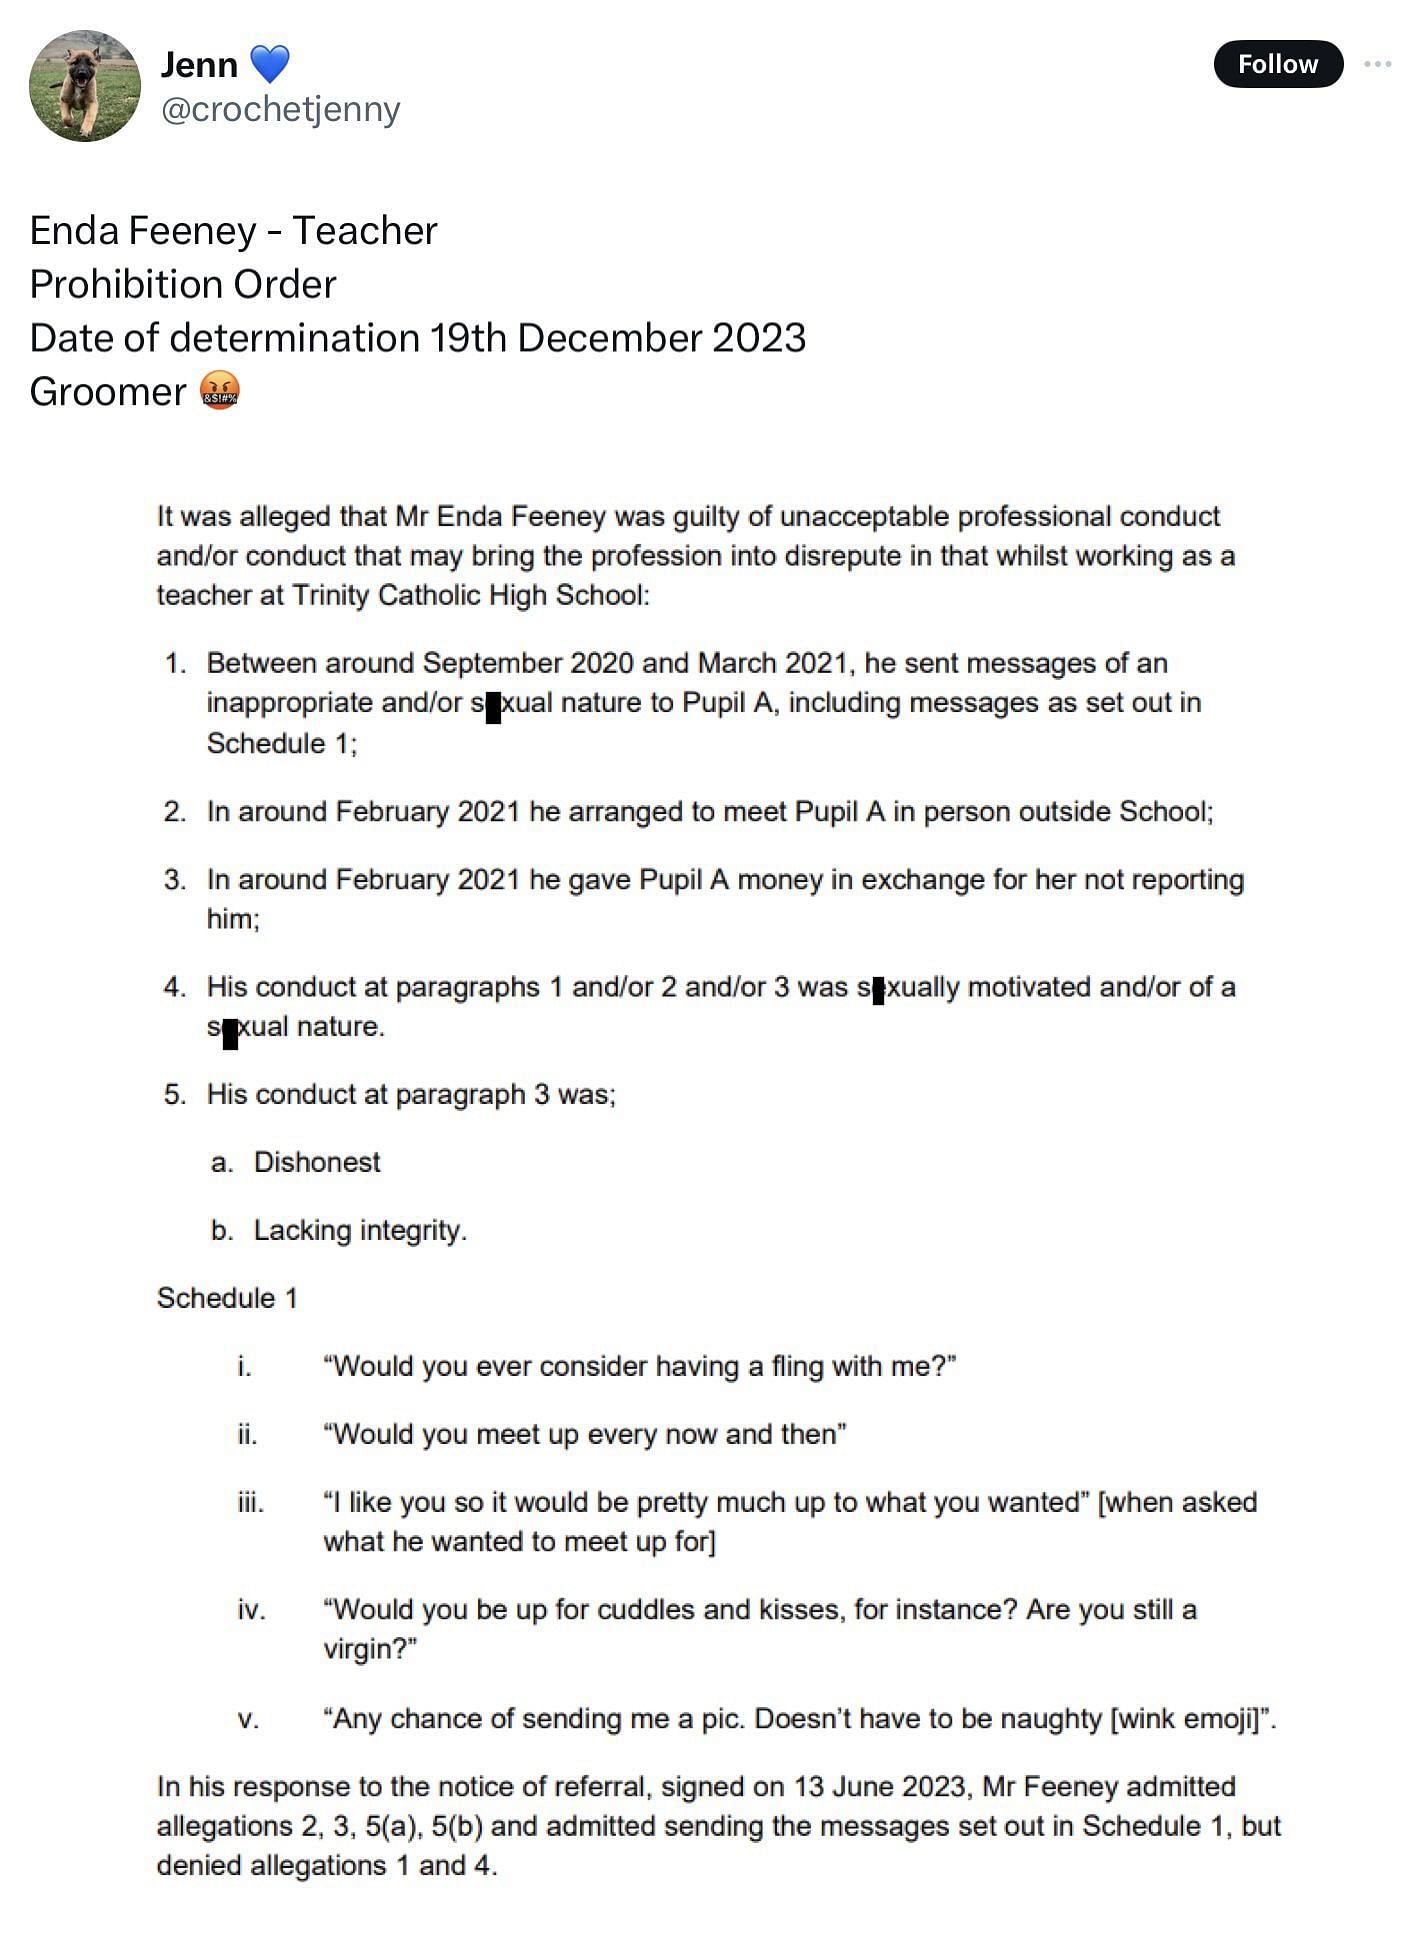 Documents about Enda Feeney&#039;s two-day hearing in December 2023 (Image via @crochetjenny/X)